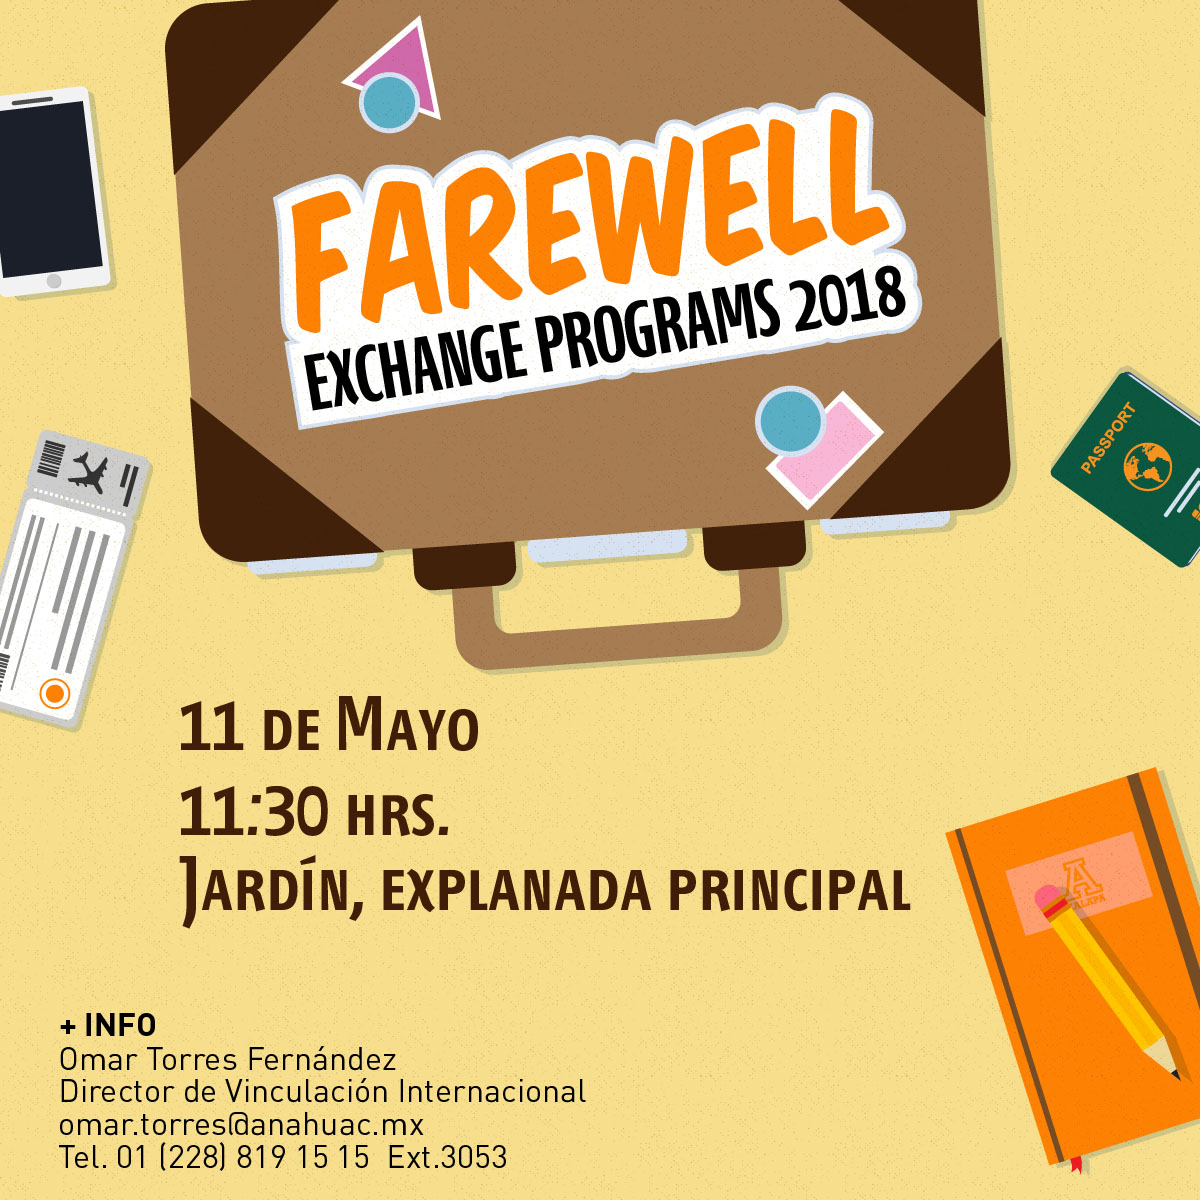 Farewell Exchange Programs 2018